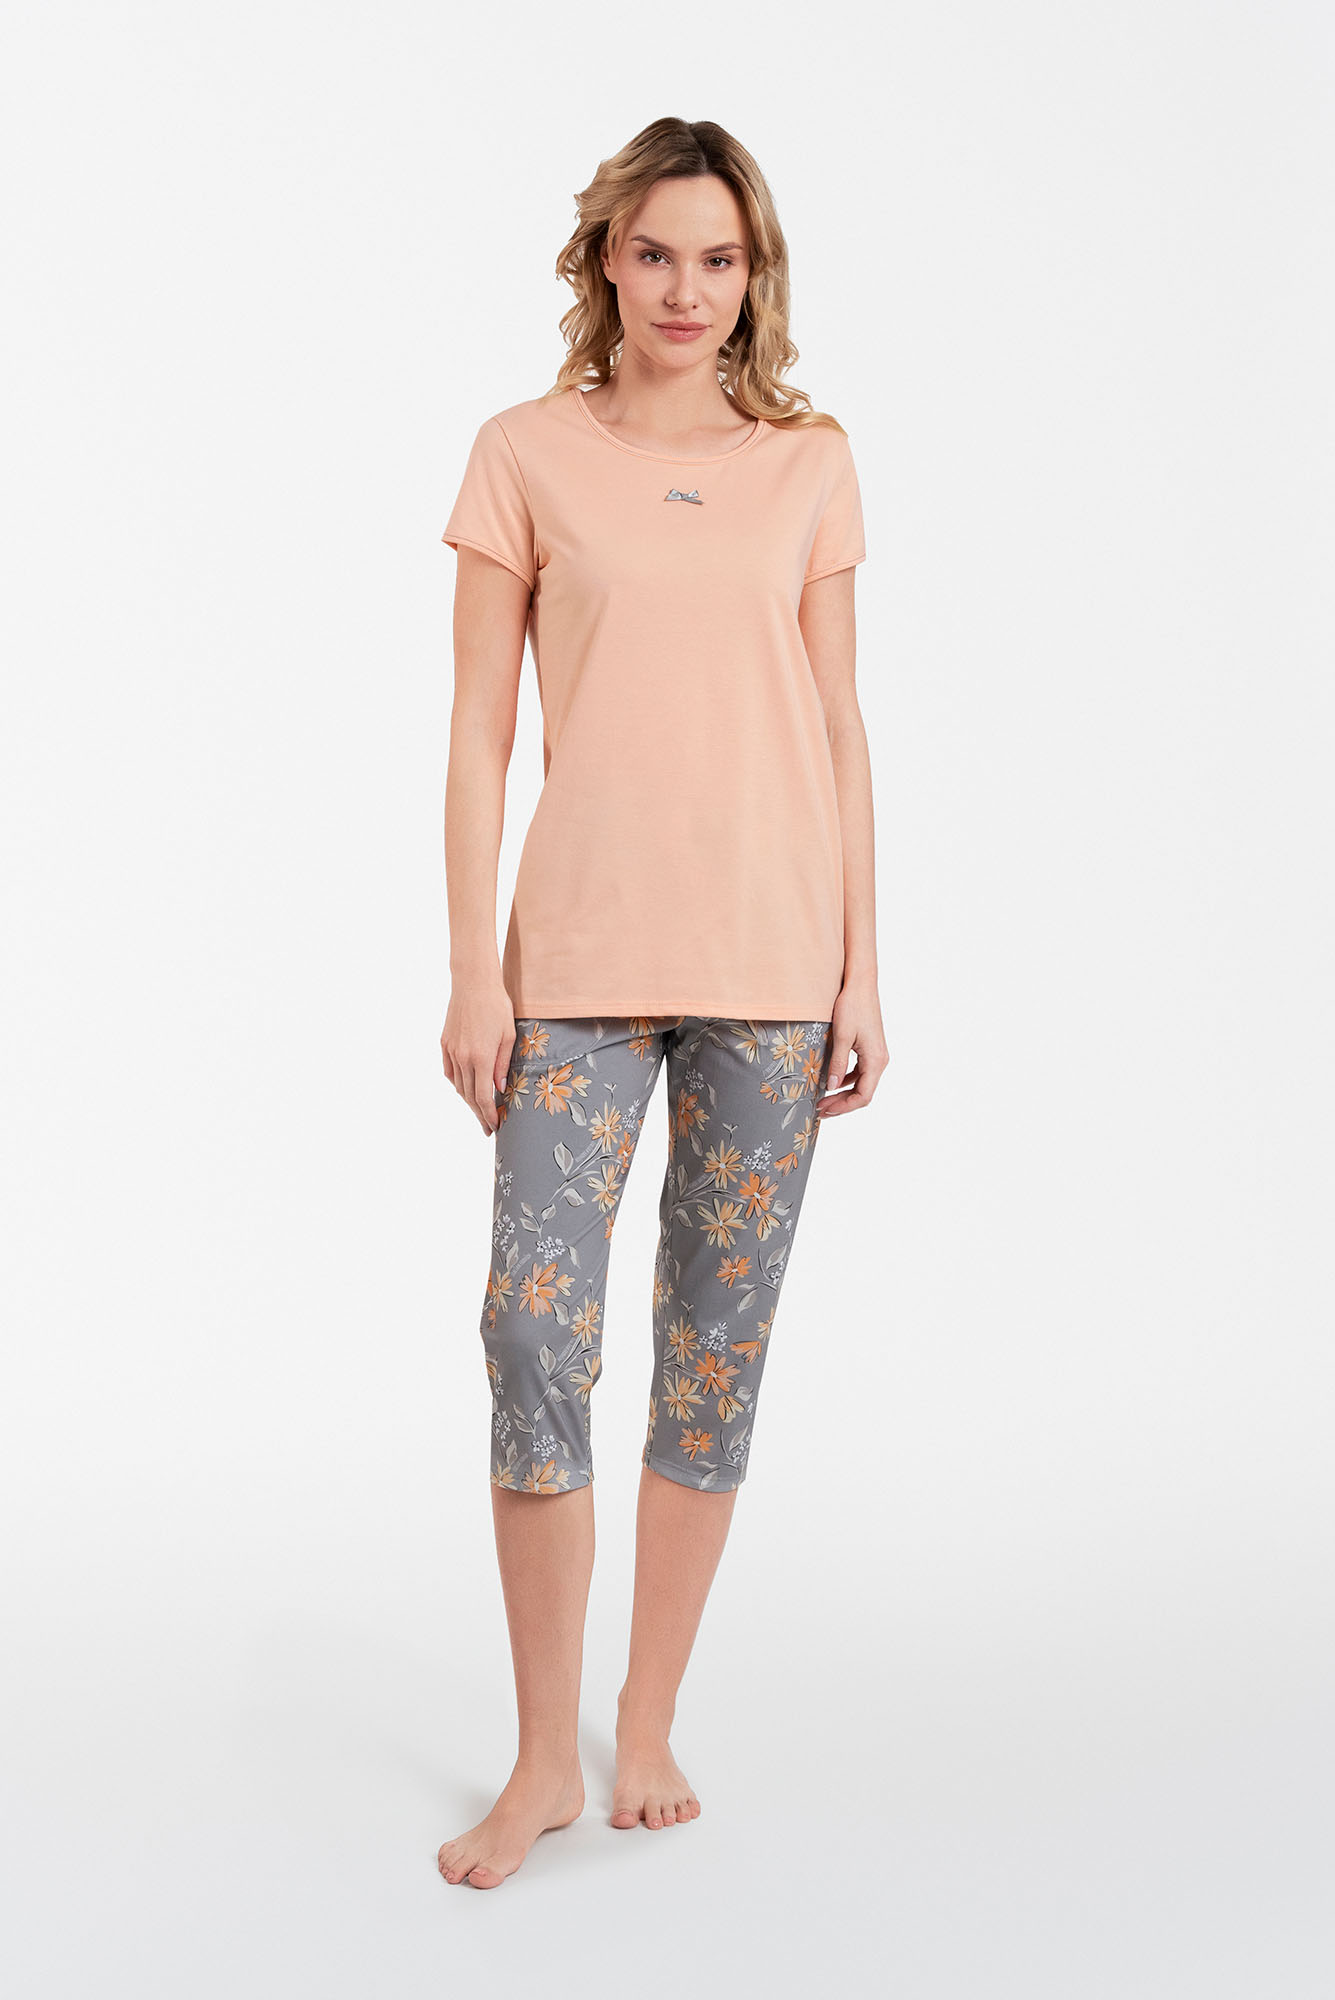 Kasali women's pyjamas, short sleeves, 3/4 leg - salmon pink/print